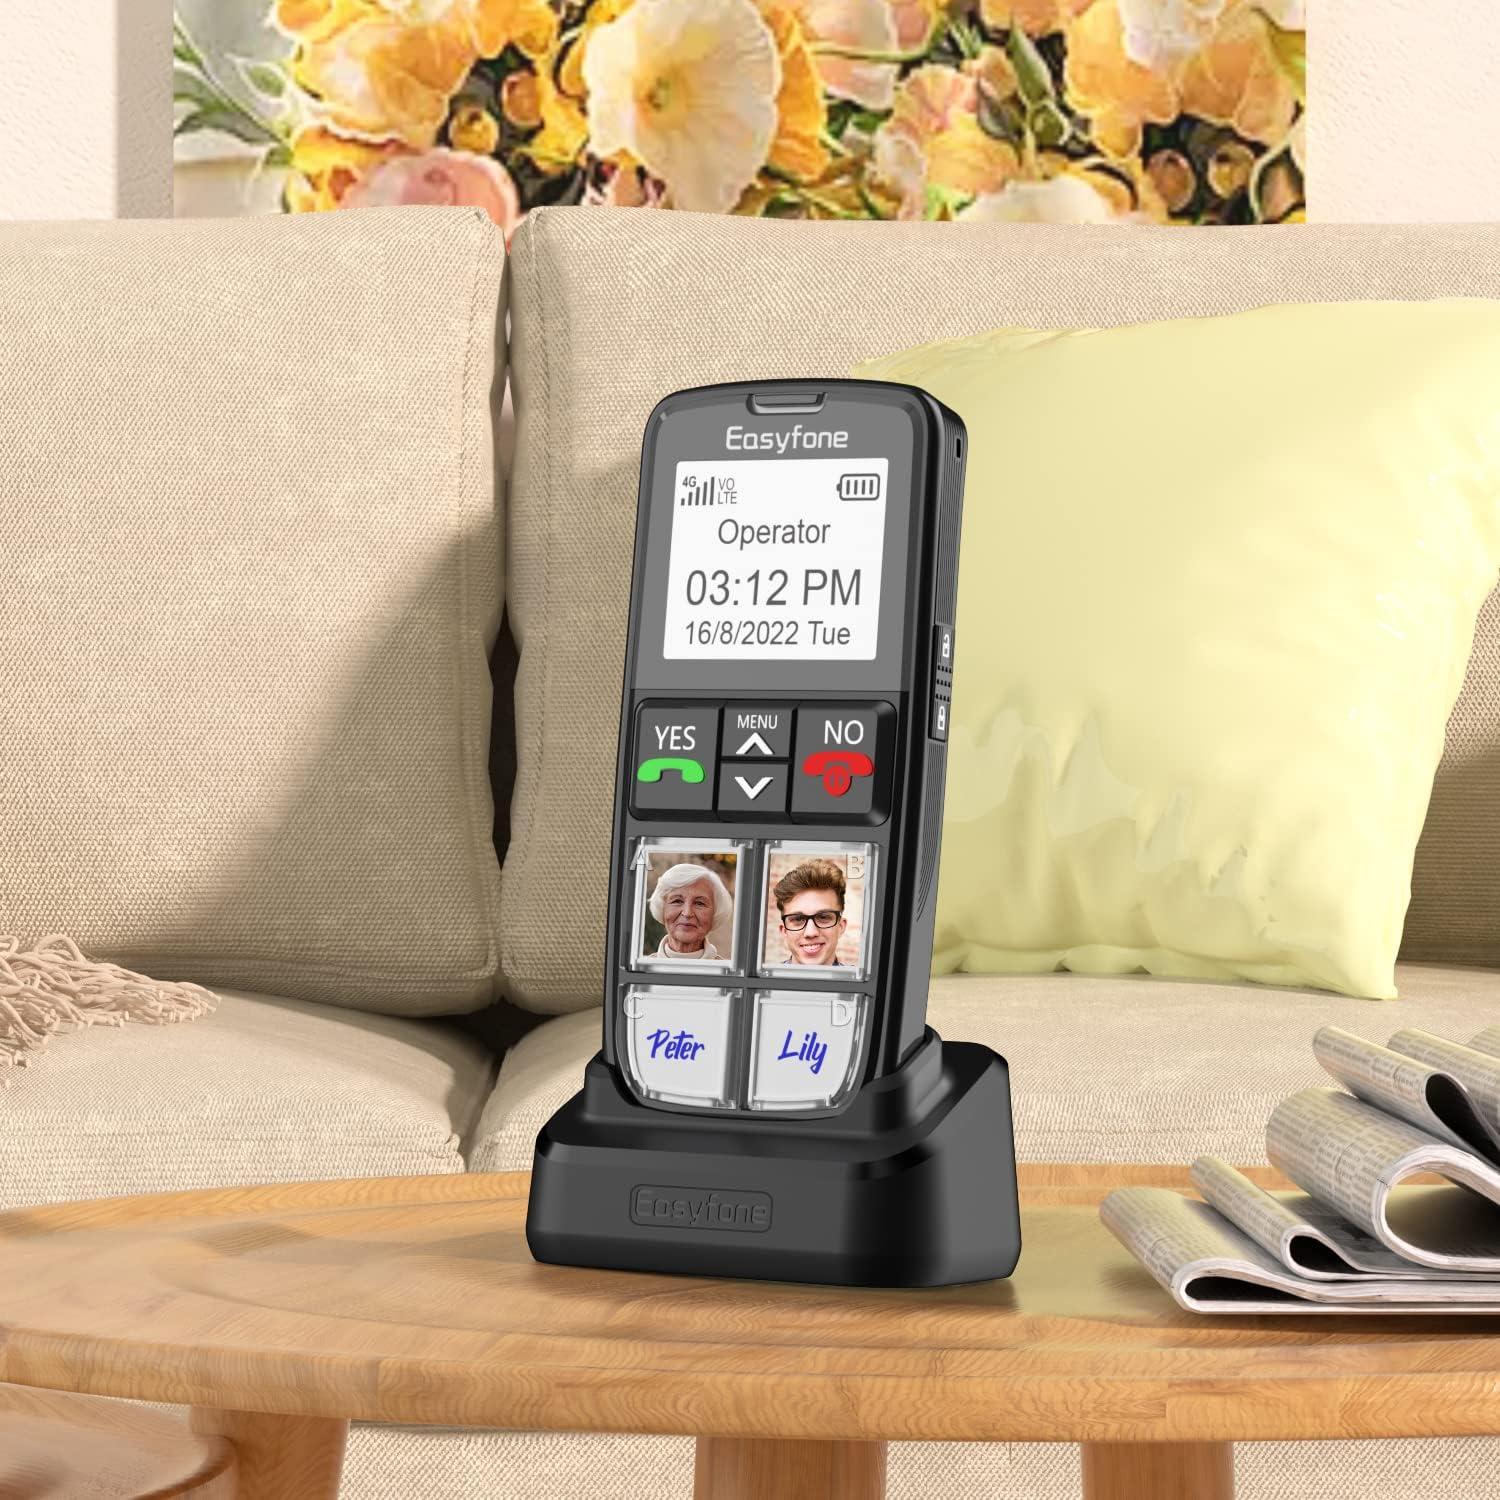  Easyfone Teléfono celular T6 4G con botón de imagen más fácil  de usar para personas mayores, botón SOS, sonido claro, base de carga  fácil, tarjeta SIM y planes flexibles, adecuado para